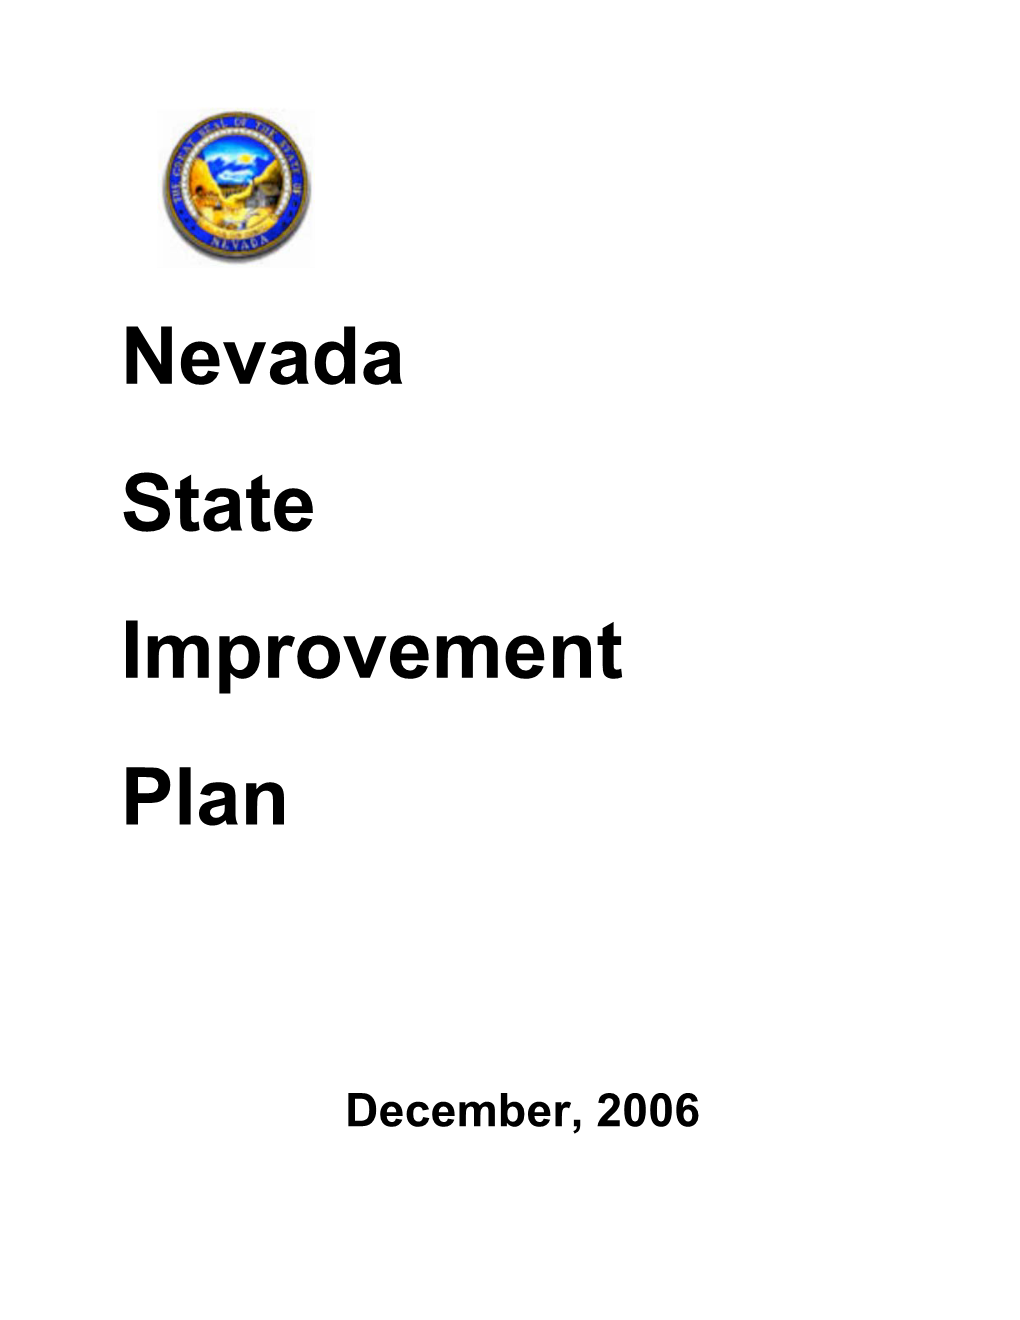 Nevada State Improvement Plan